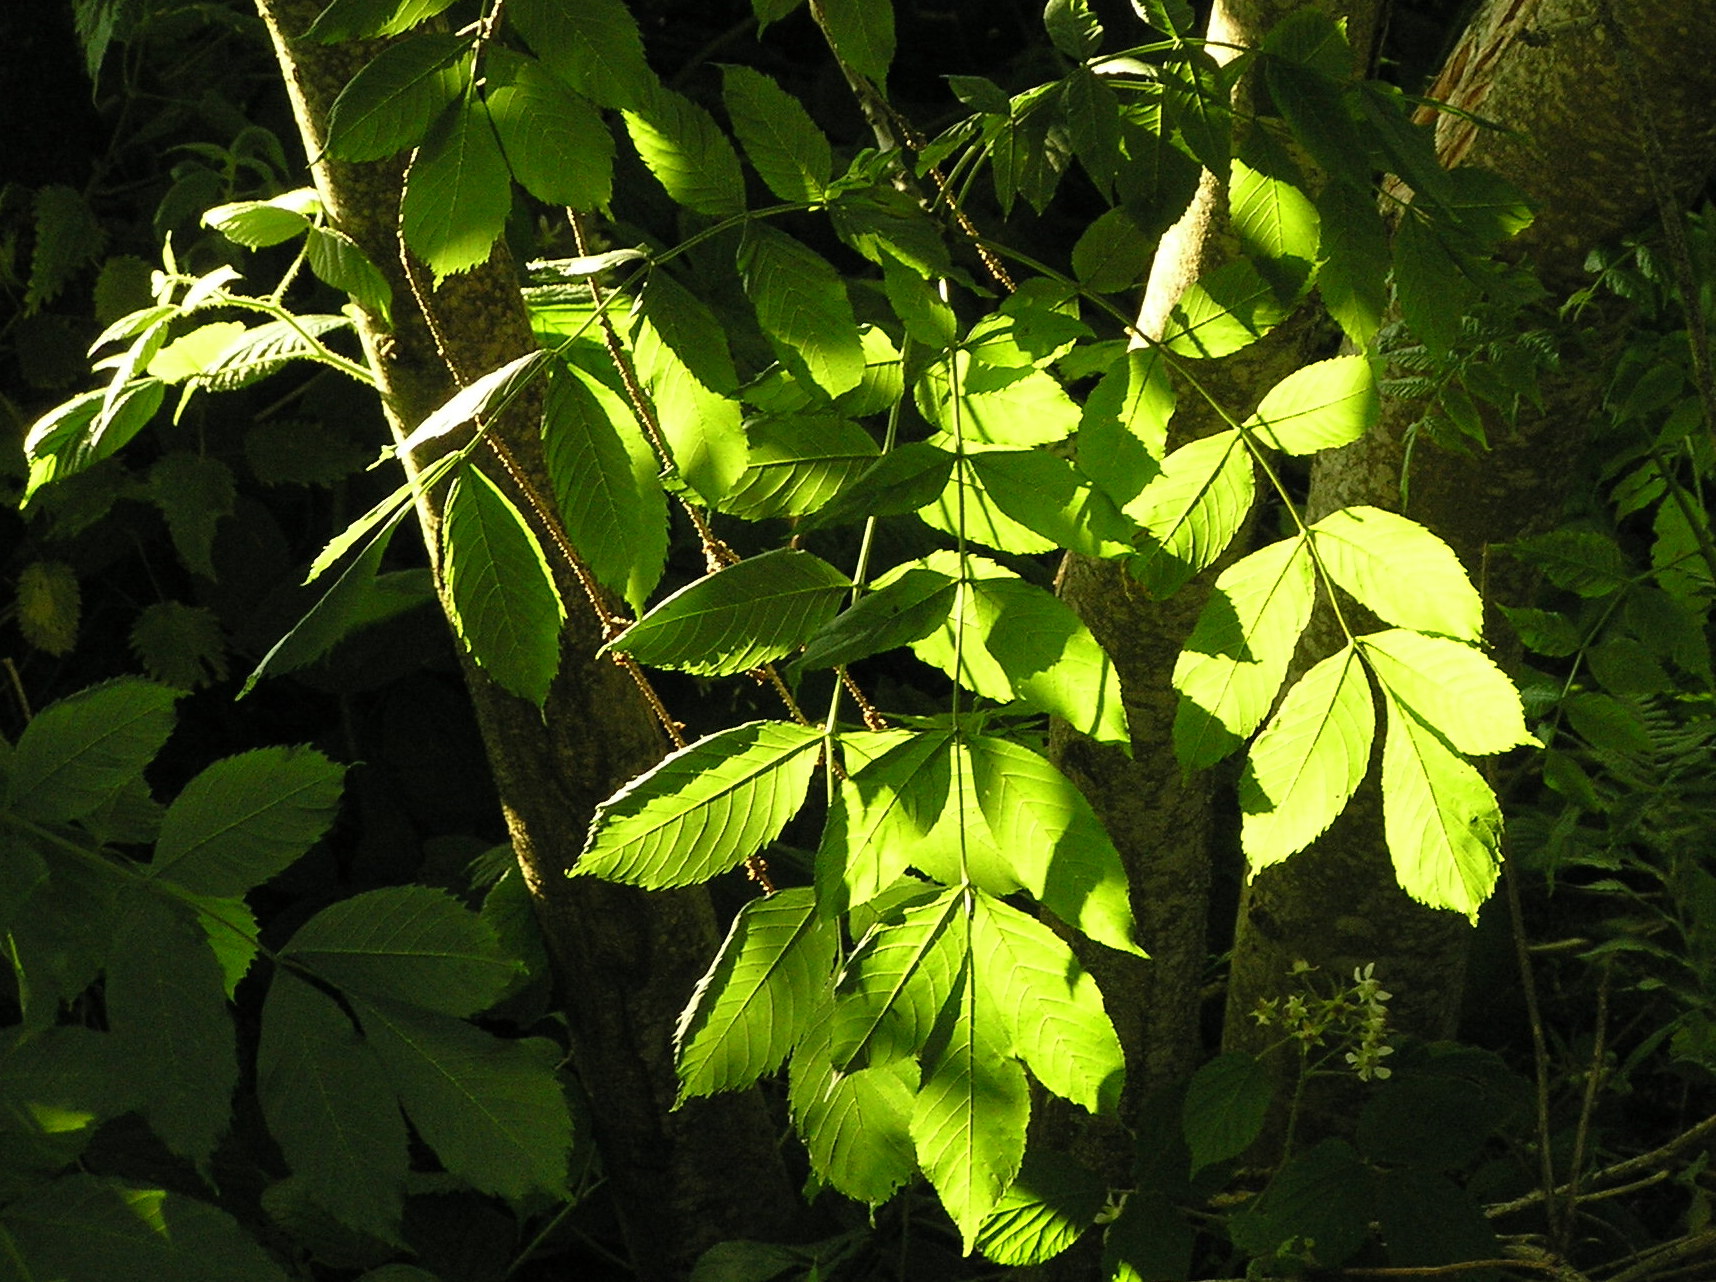 Evergreen leaves